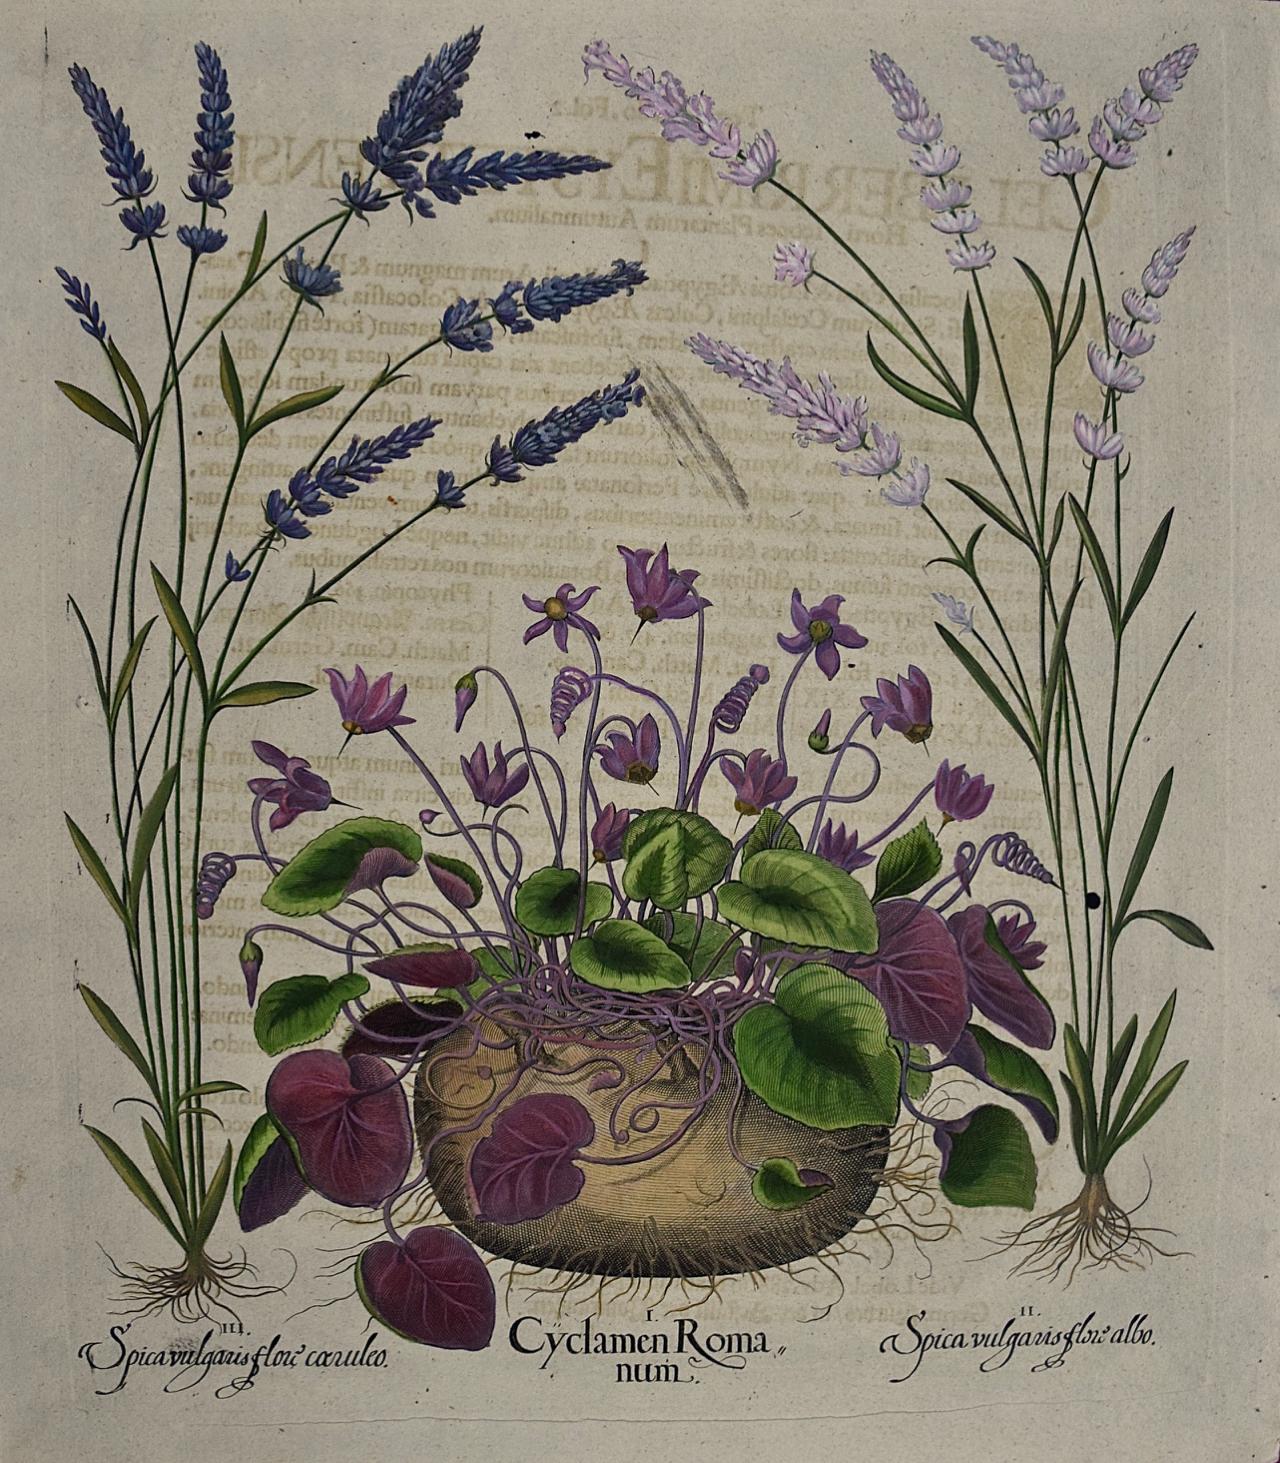 Basilius Besler Still-Life Print - Besler Hand-colored Botanical Engraving of Flowering Cyclamen & Lavender Plants